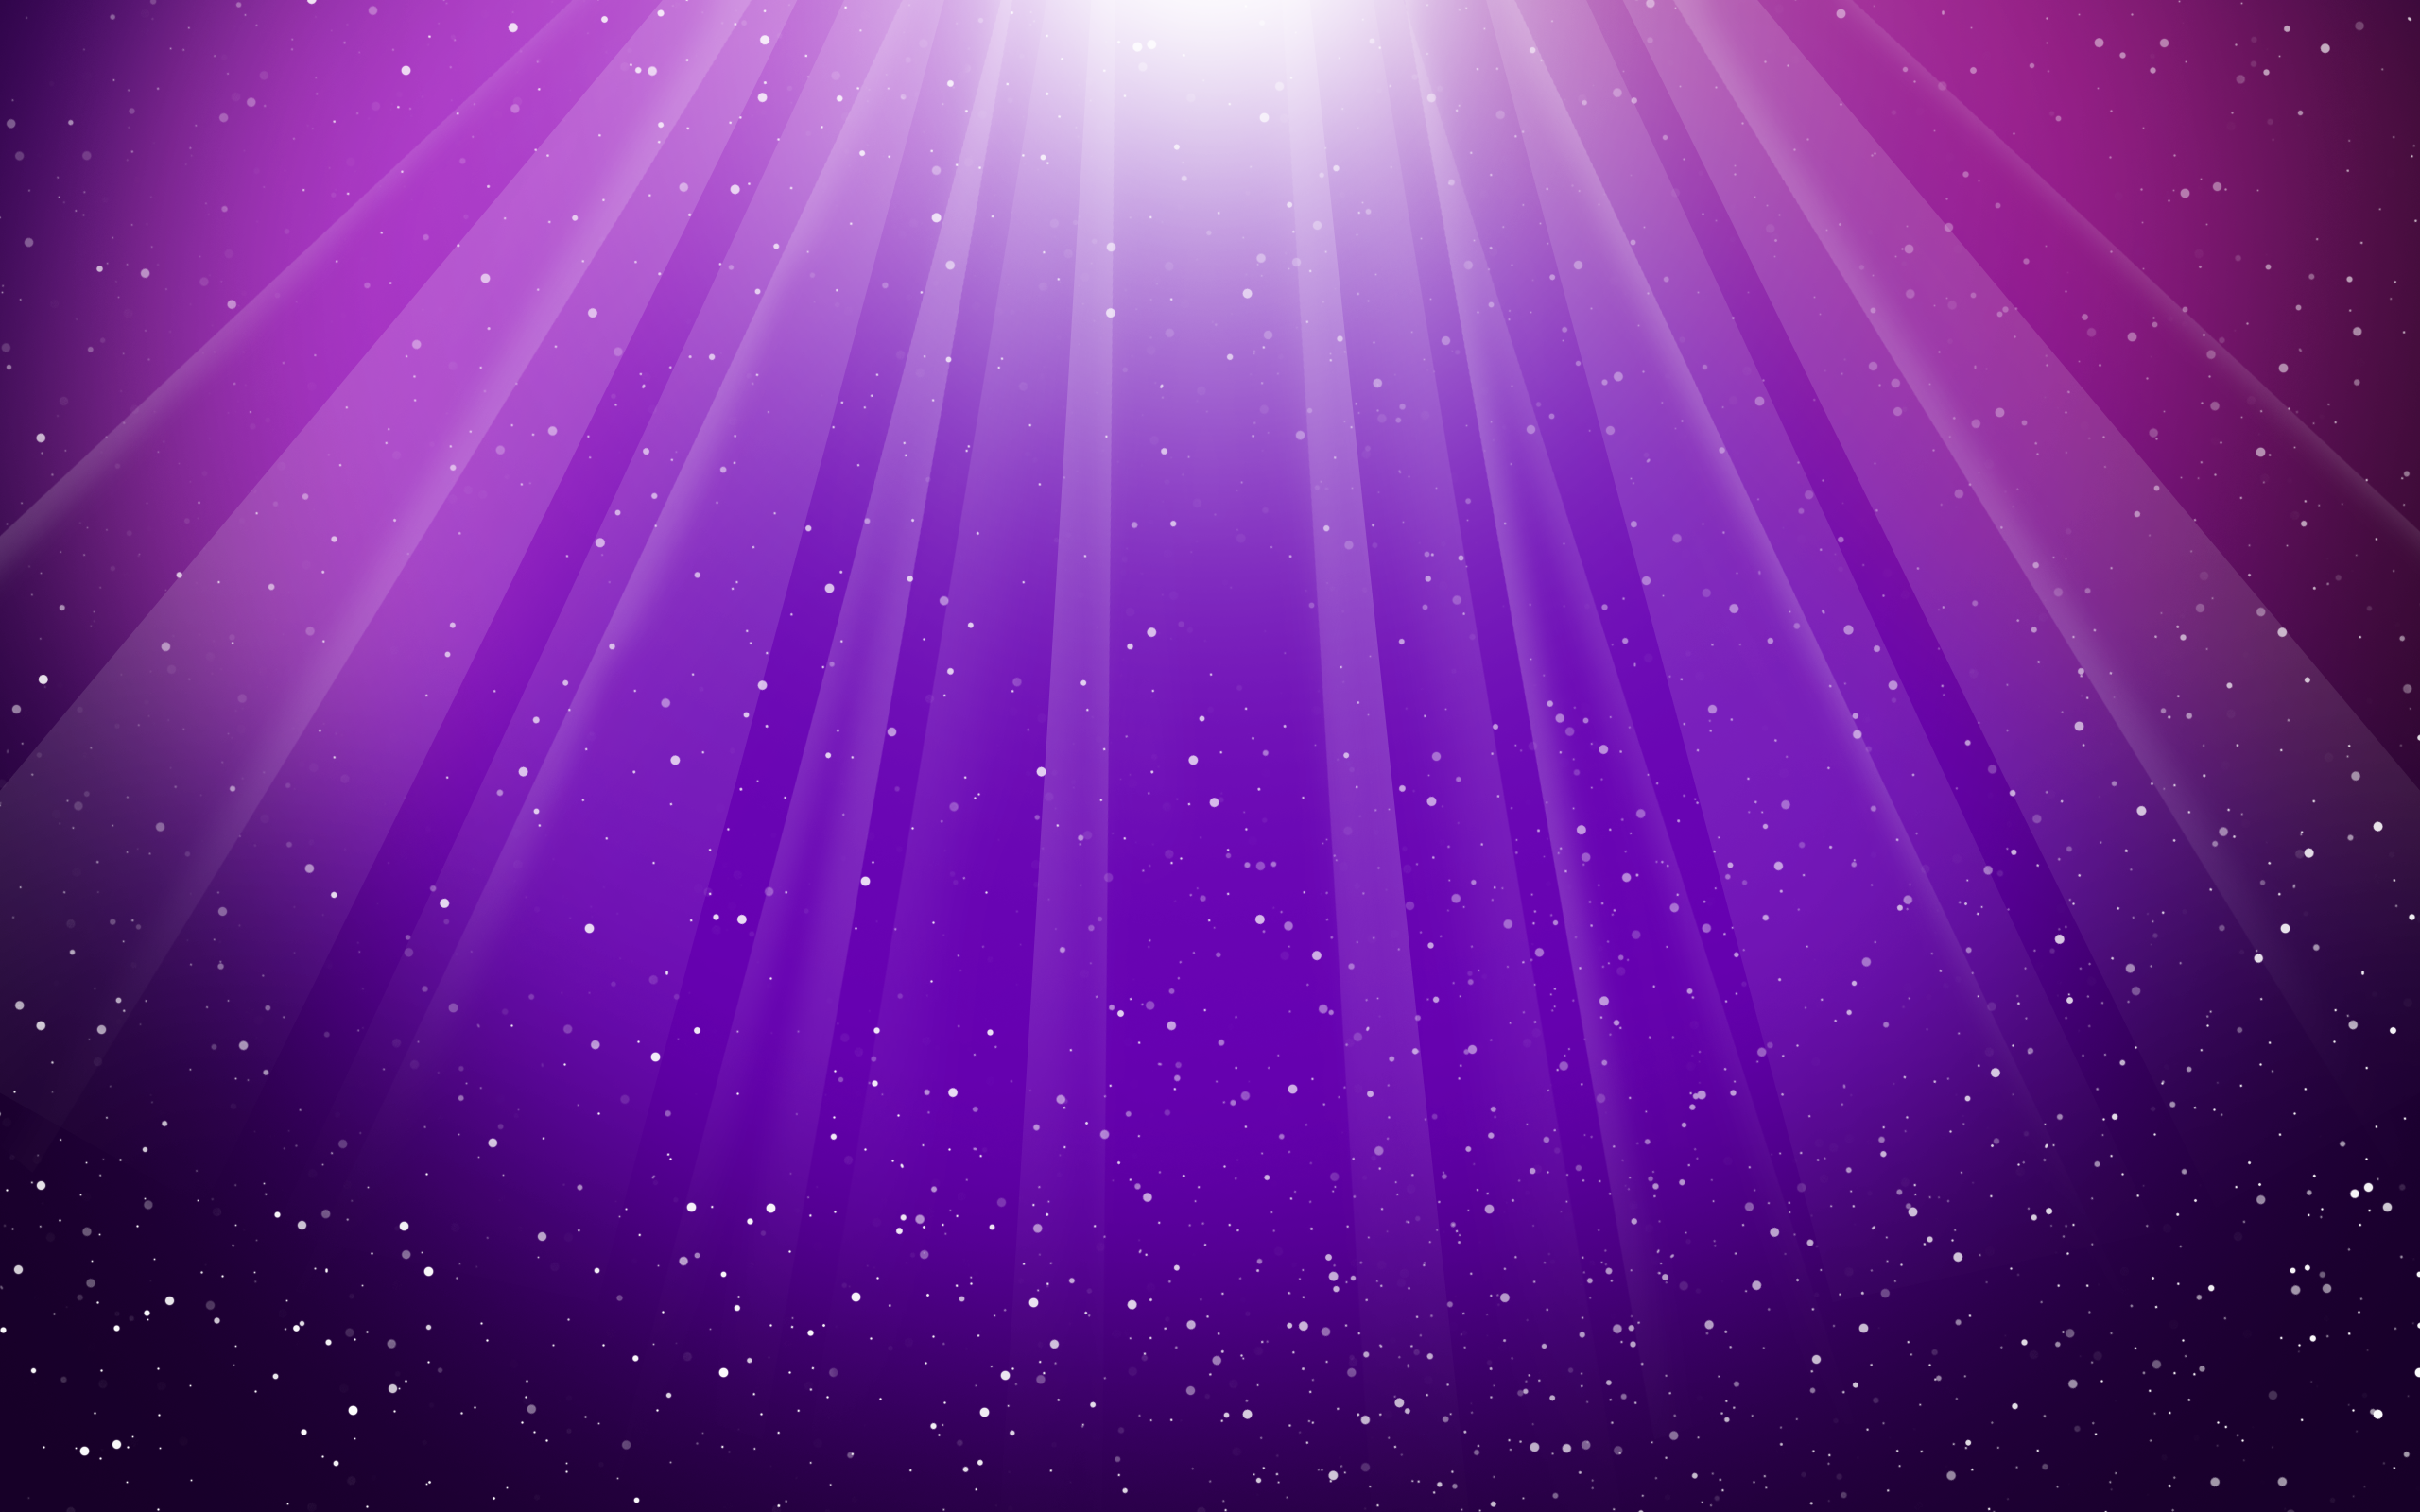 Cool purple background